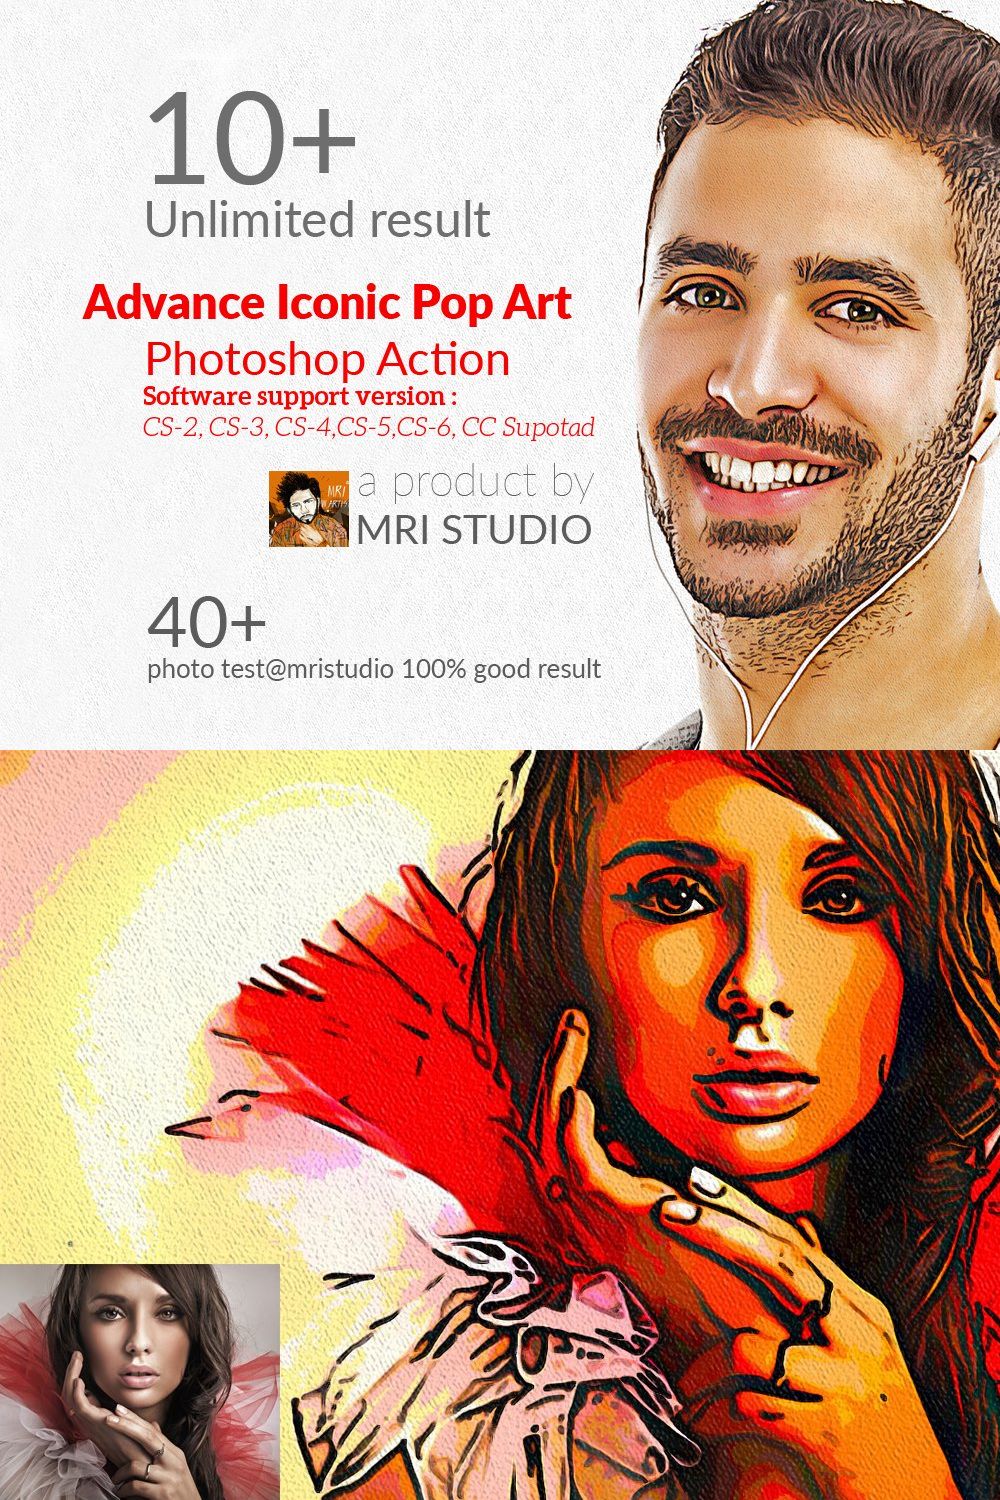 Advance Iconic Pop Art Action pinterest preview image.